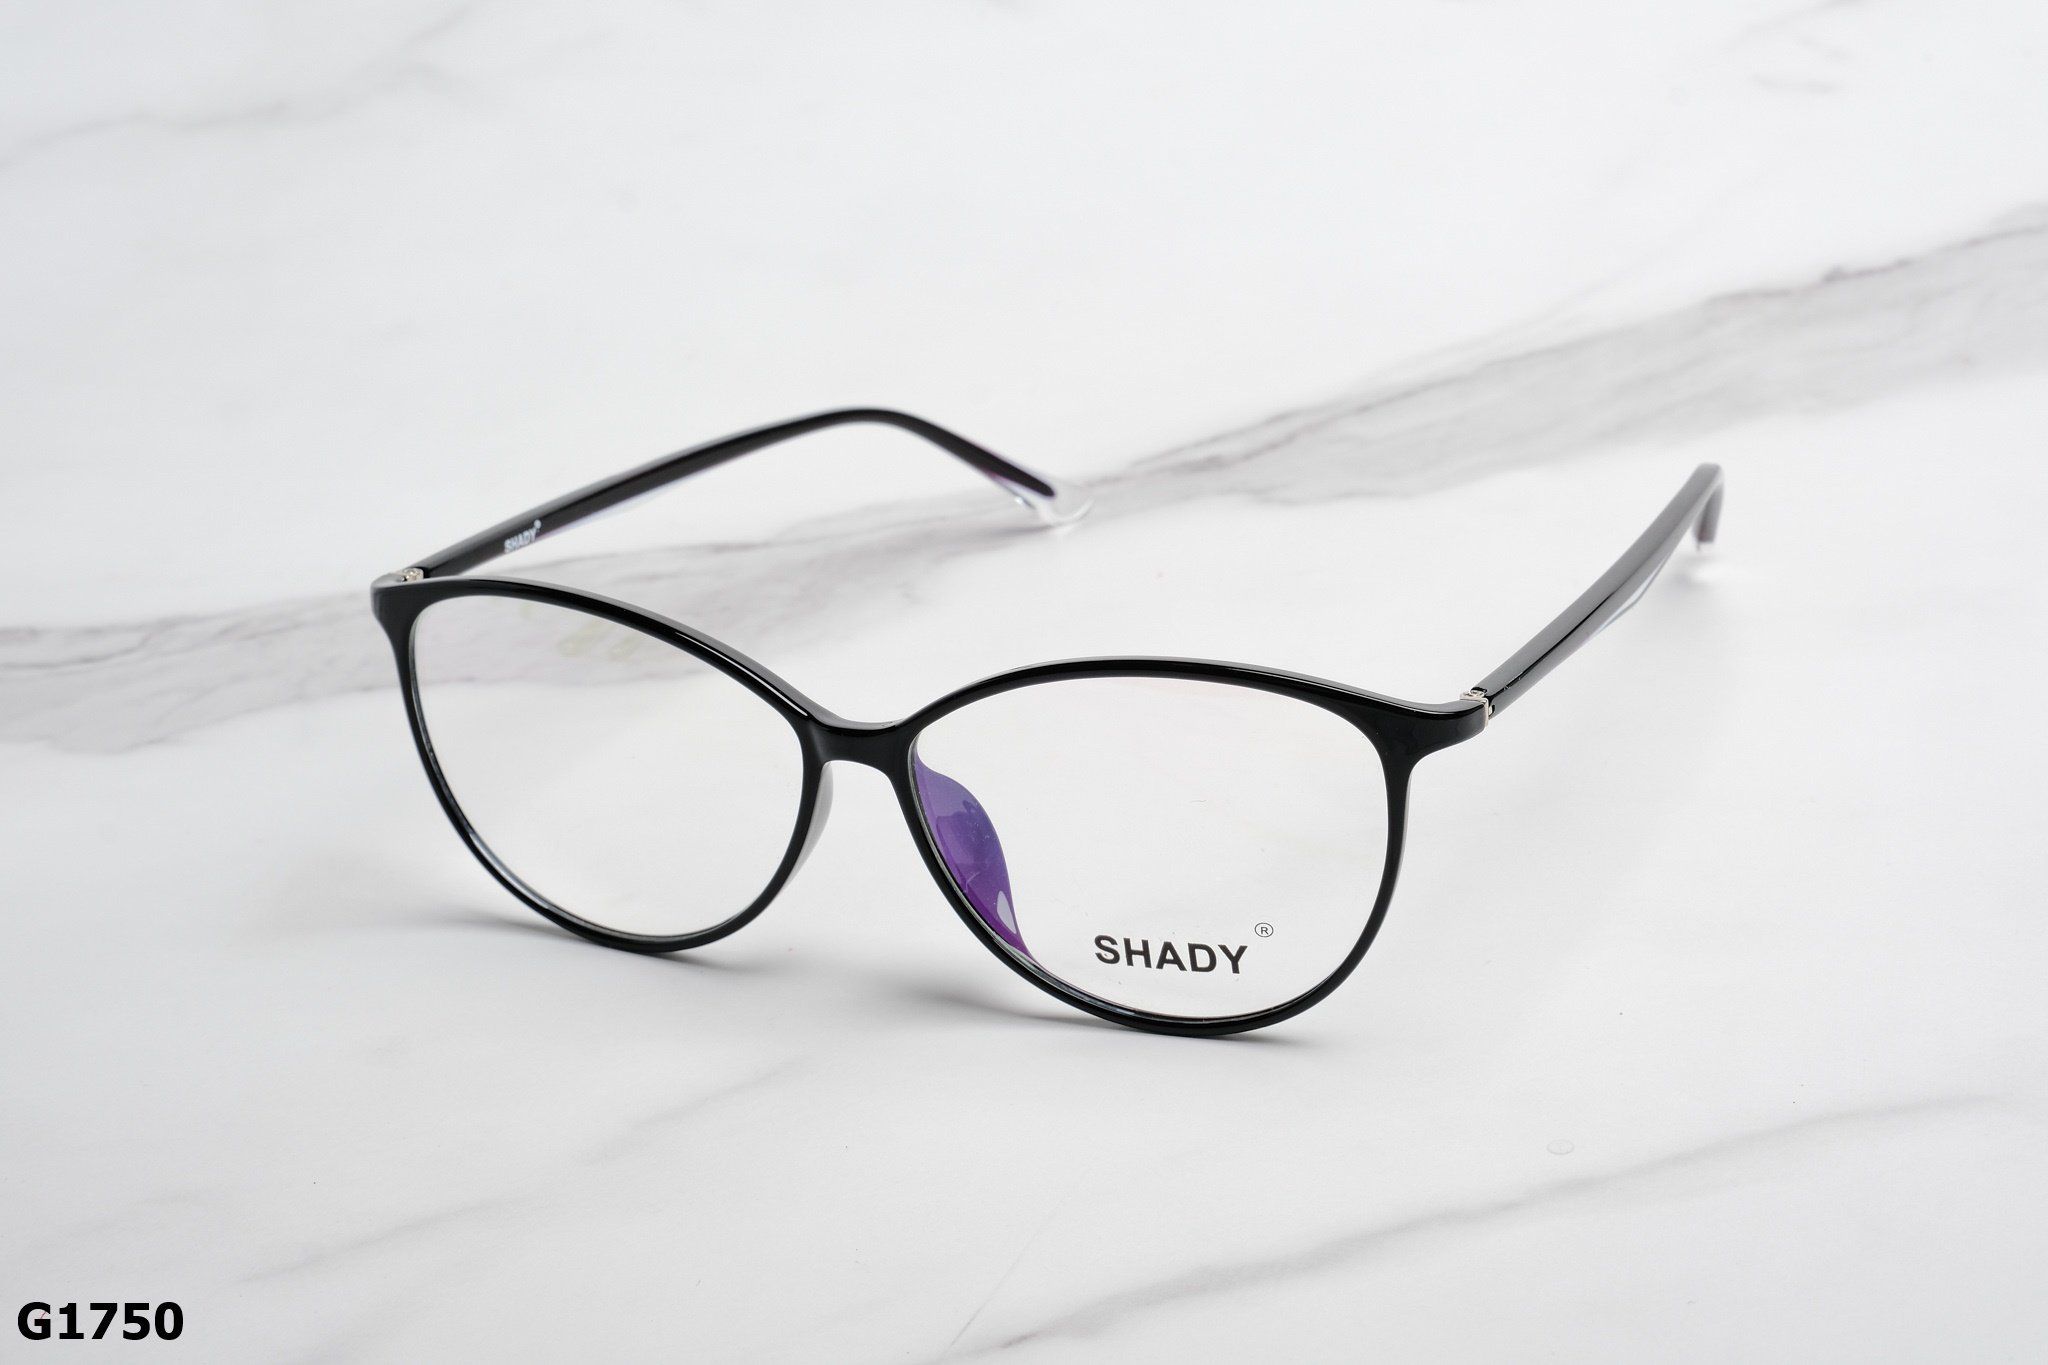  SHADY Eyewear - Glasses - G1750 